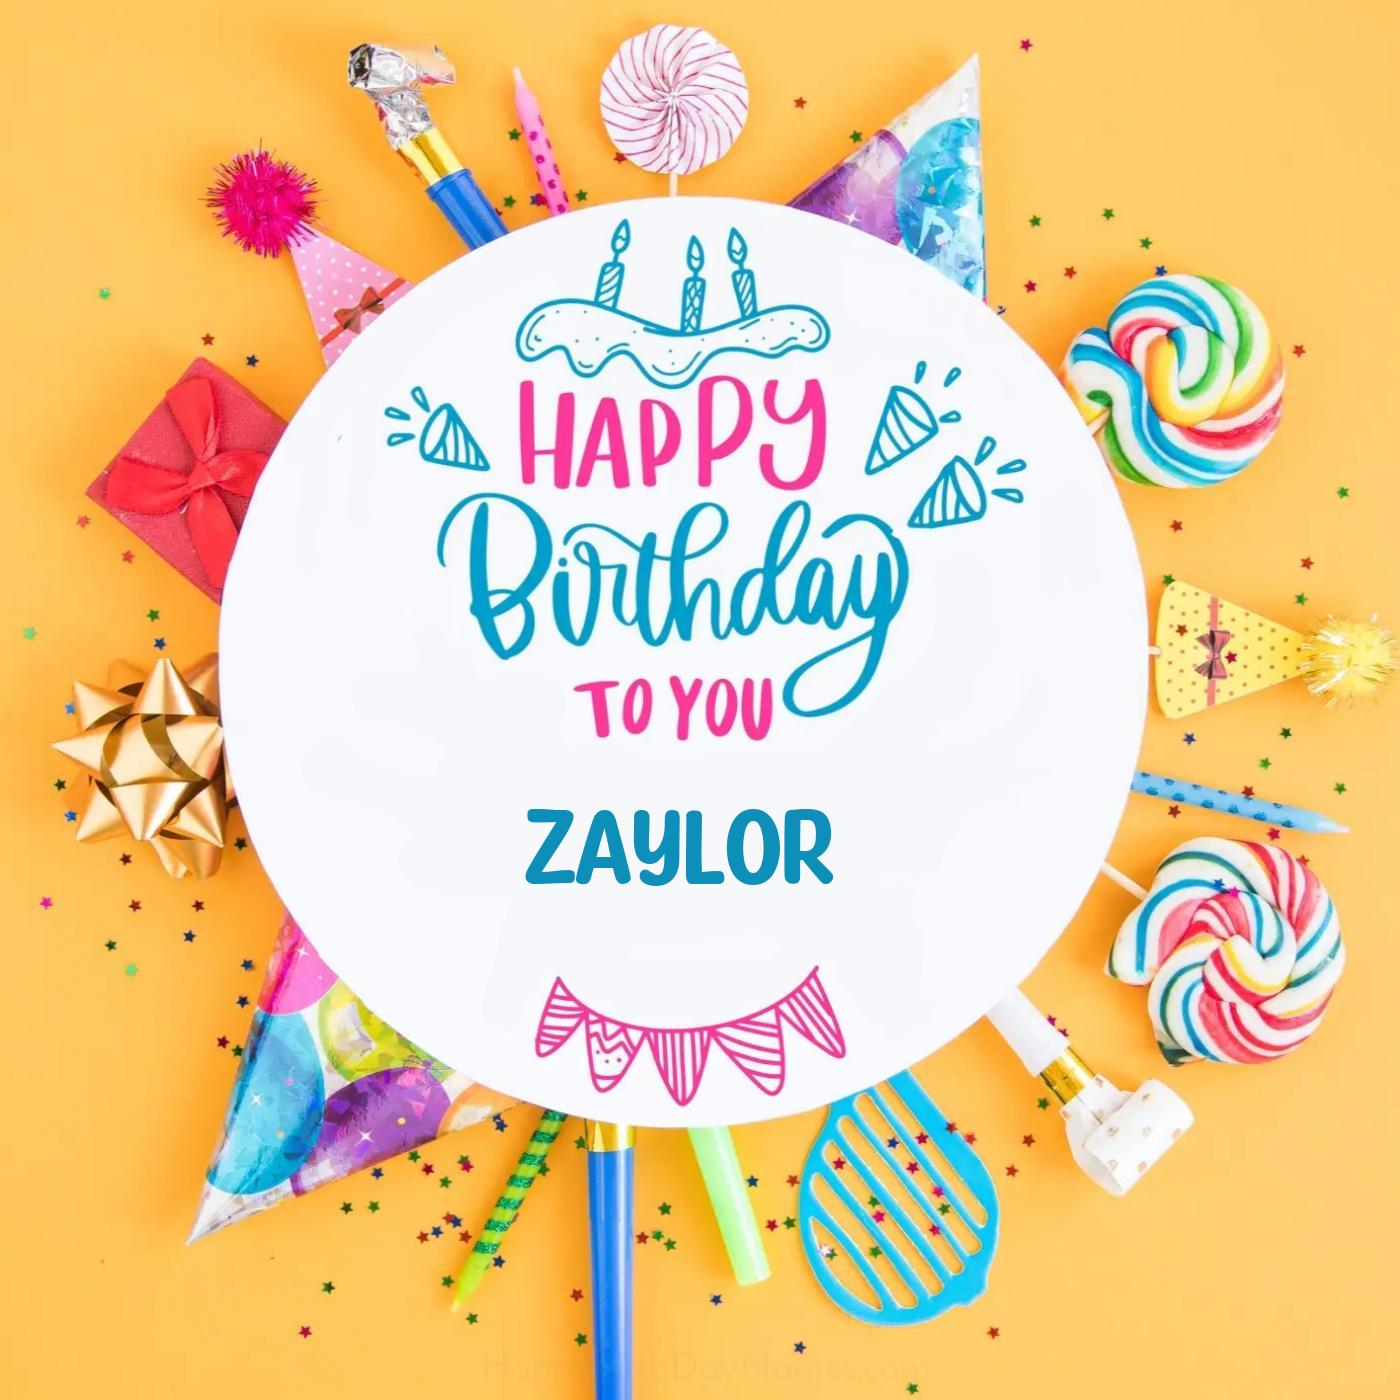 Happy Birthday Zaylor Party Celebration Card